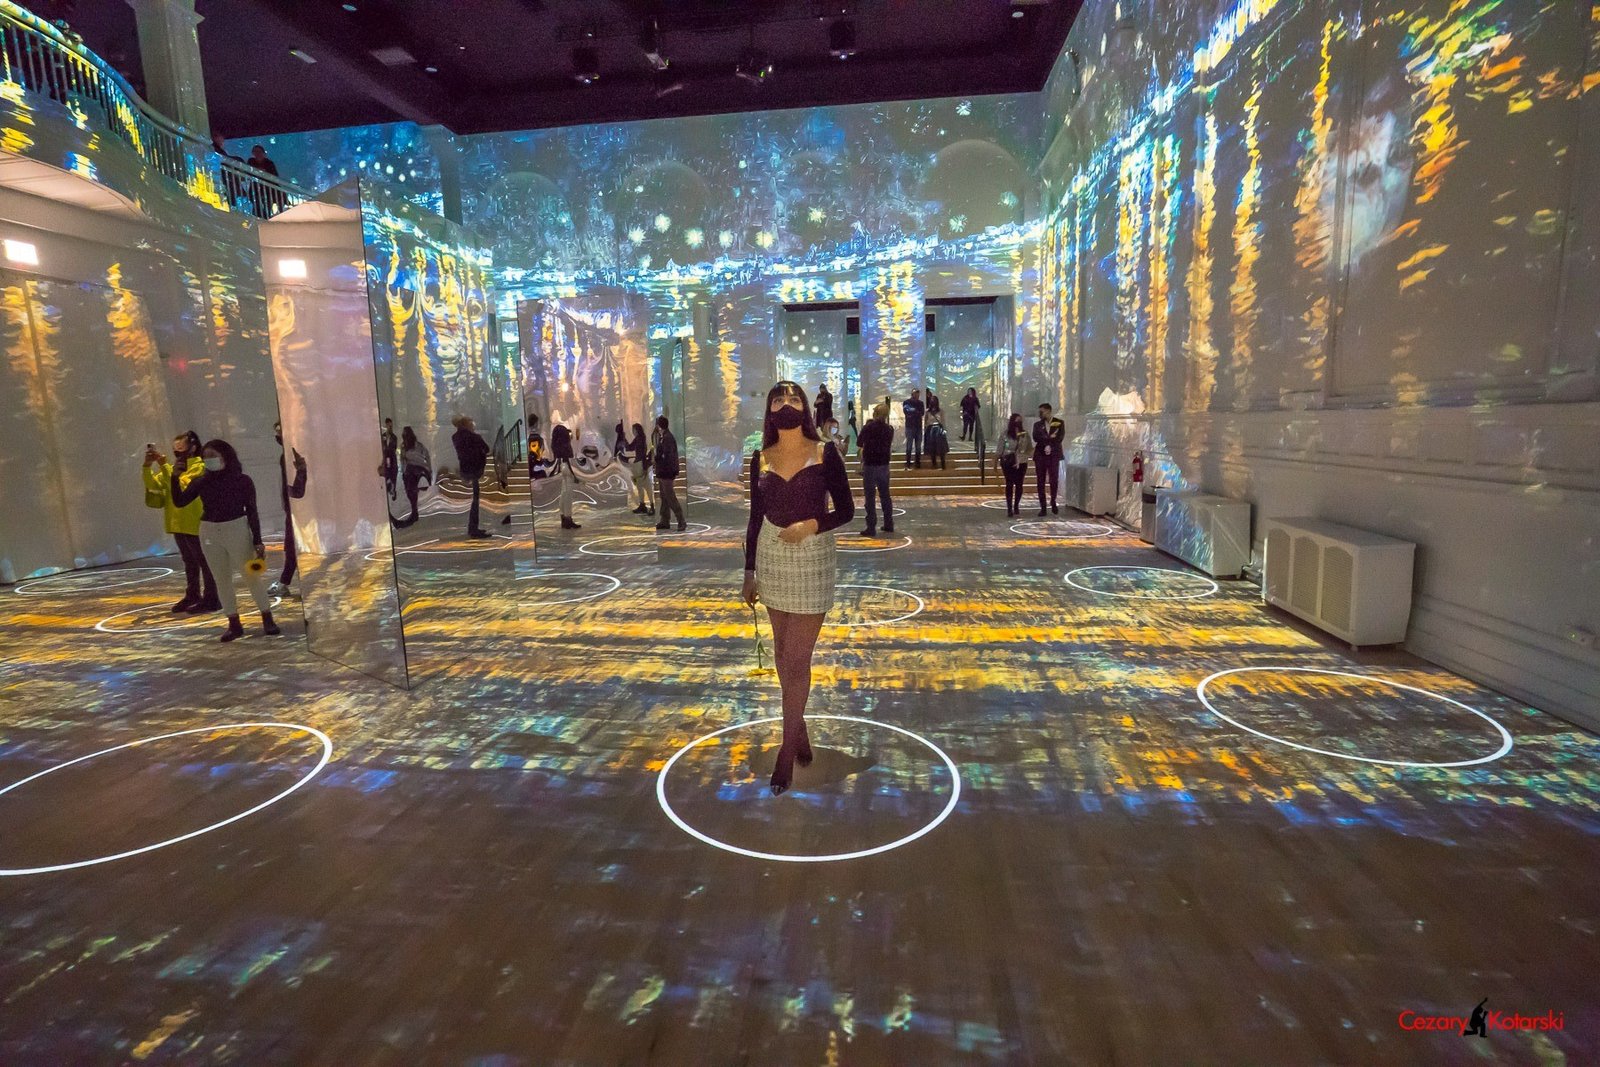 Plunge into Van Gogh Immersive Exhibit in Chicago